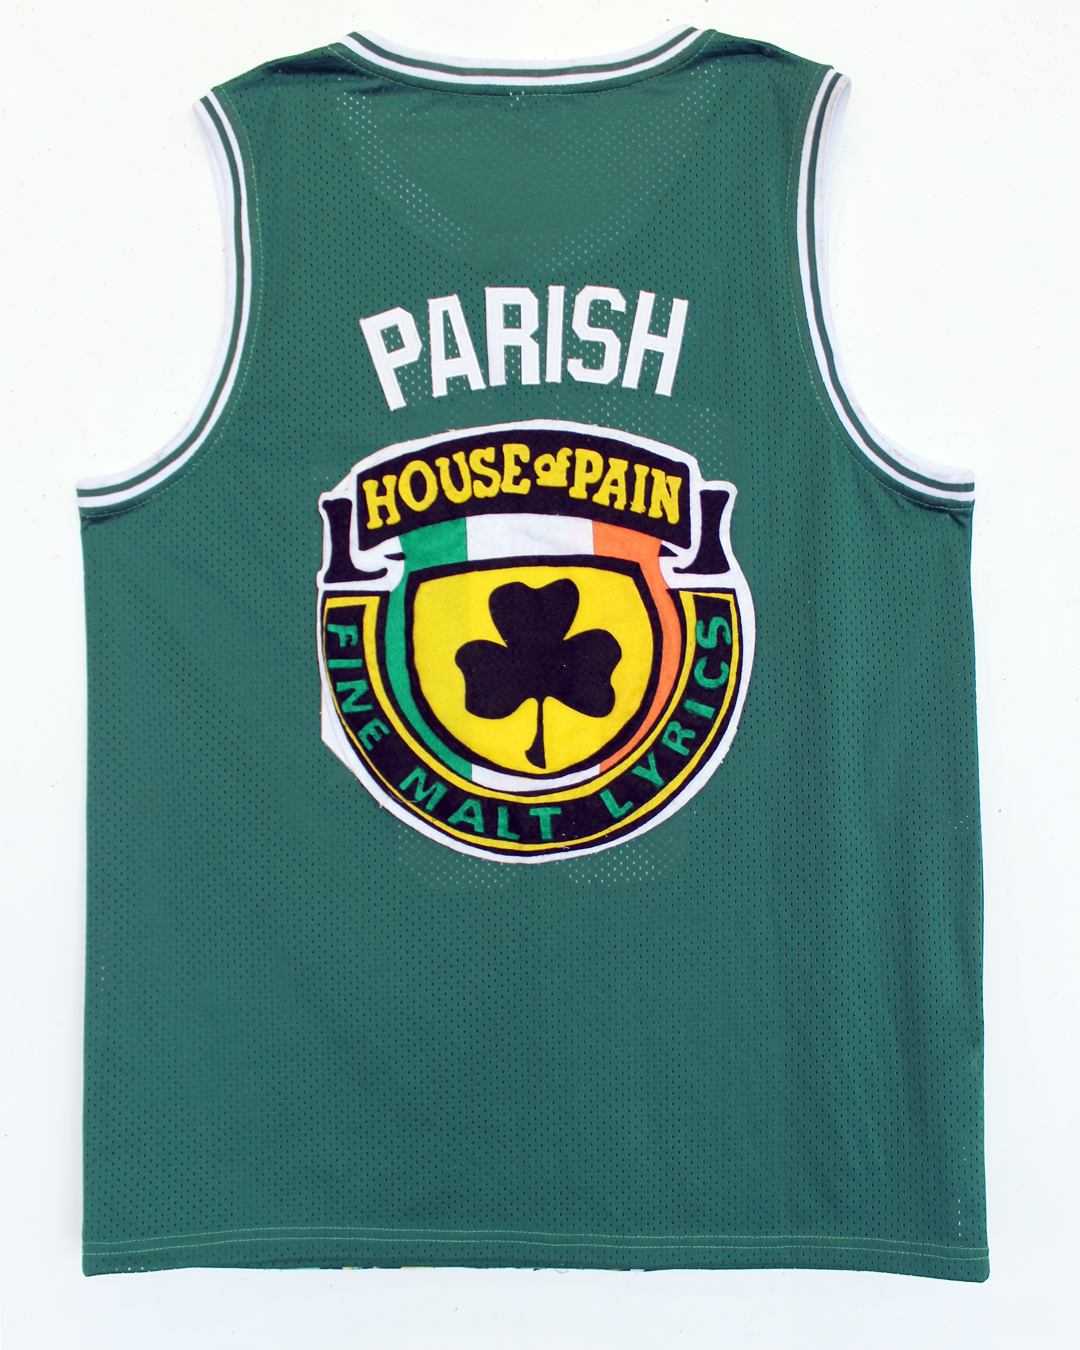 robert-parish-house-of-pain-back-jersey.png